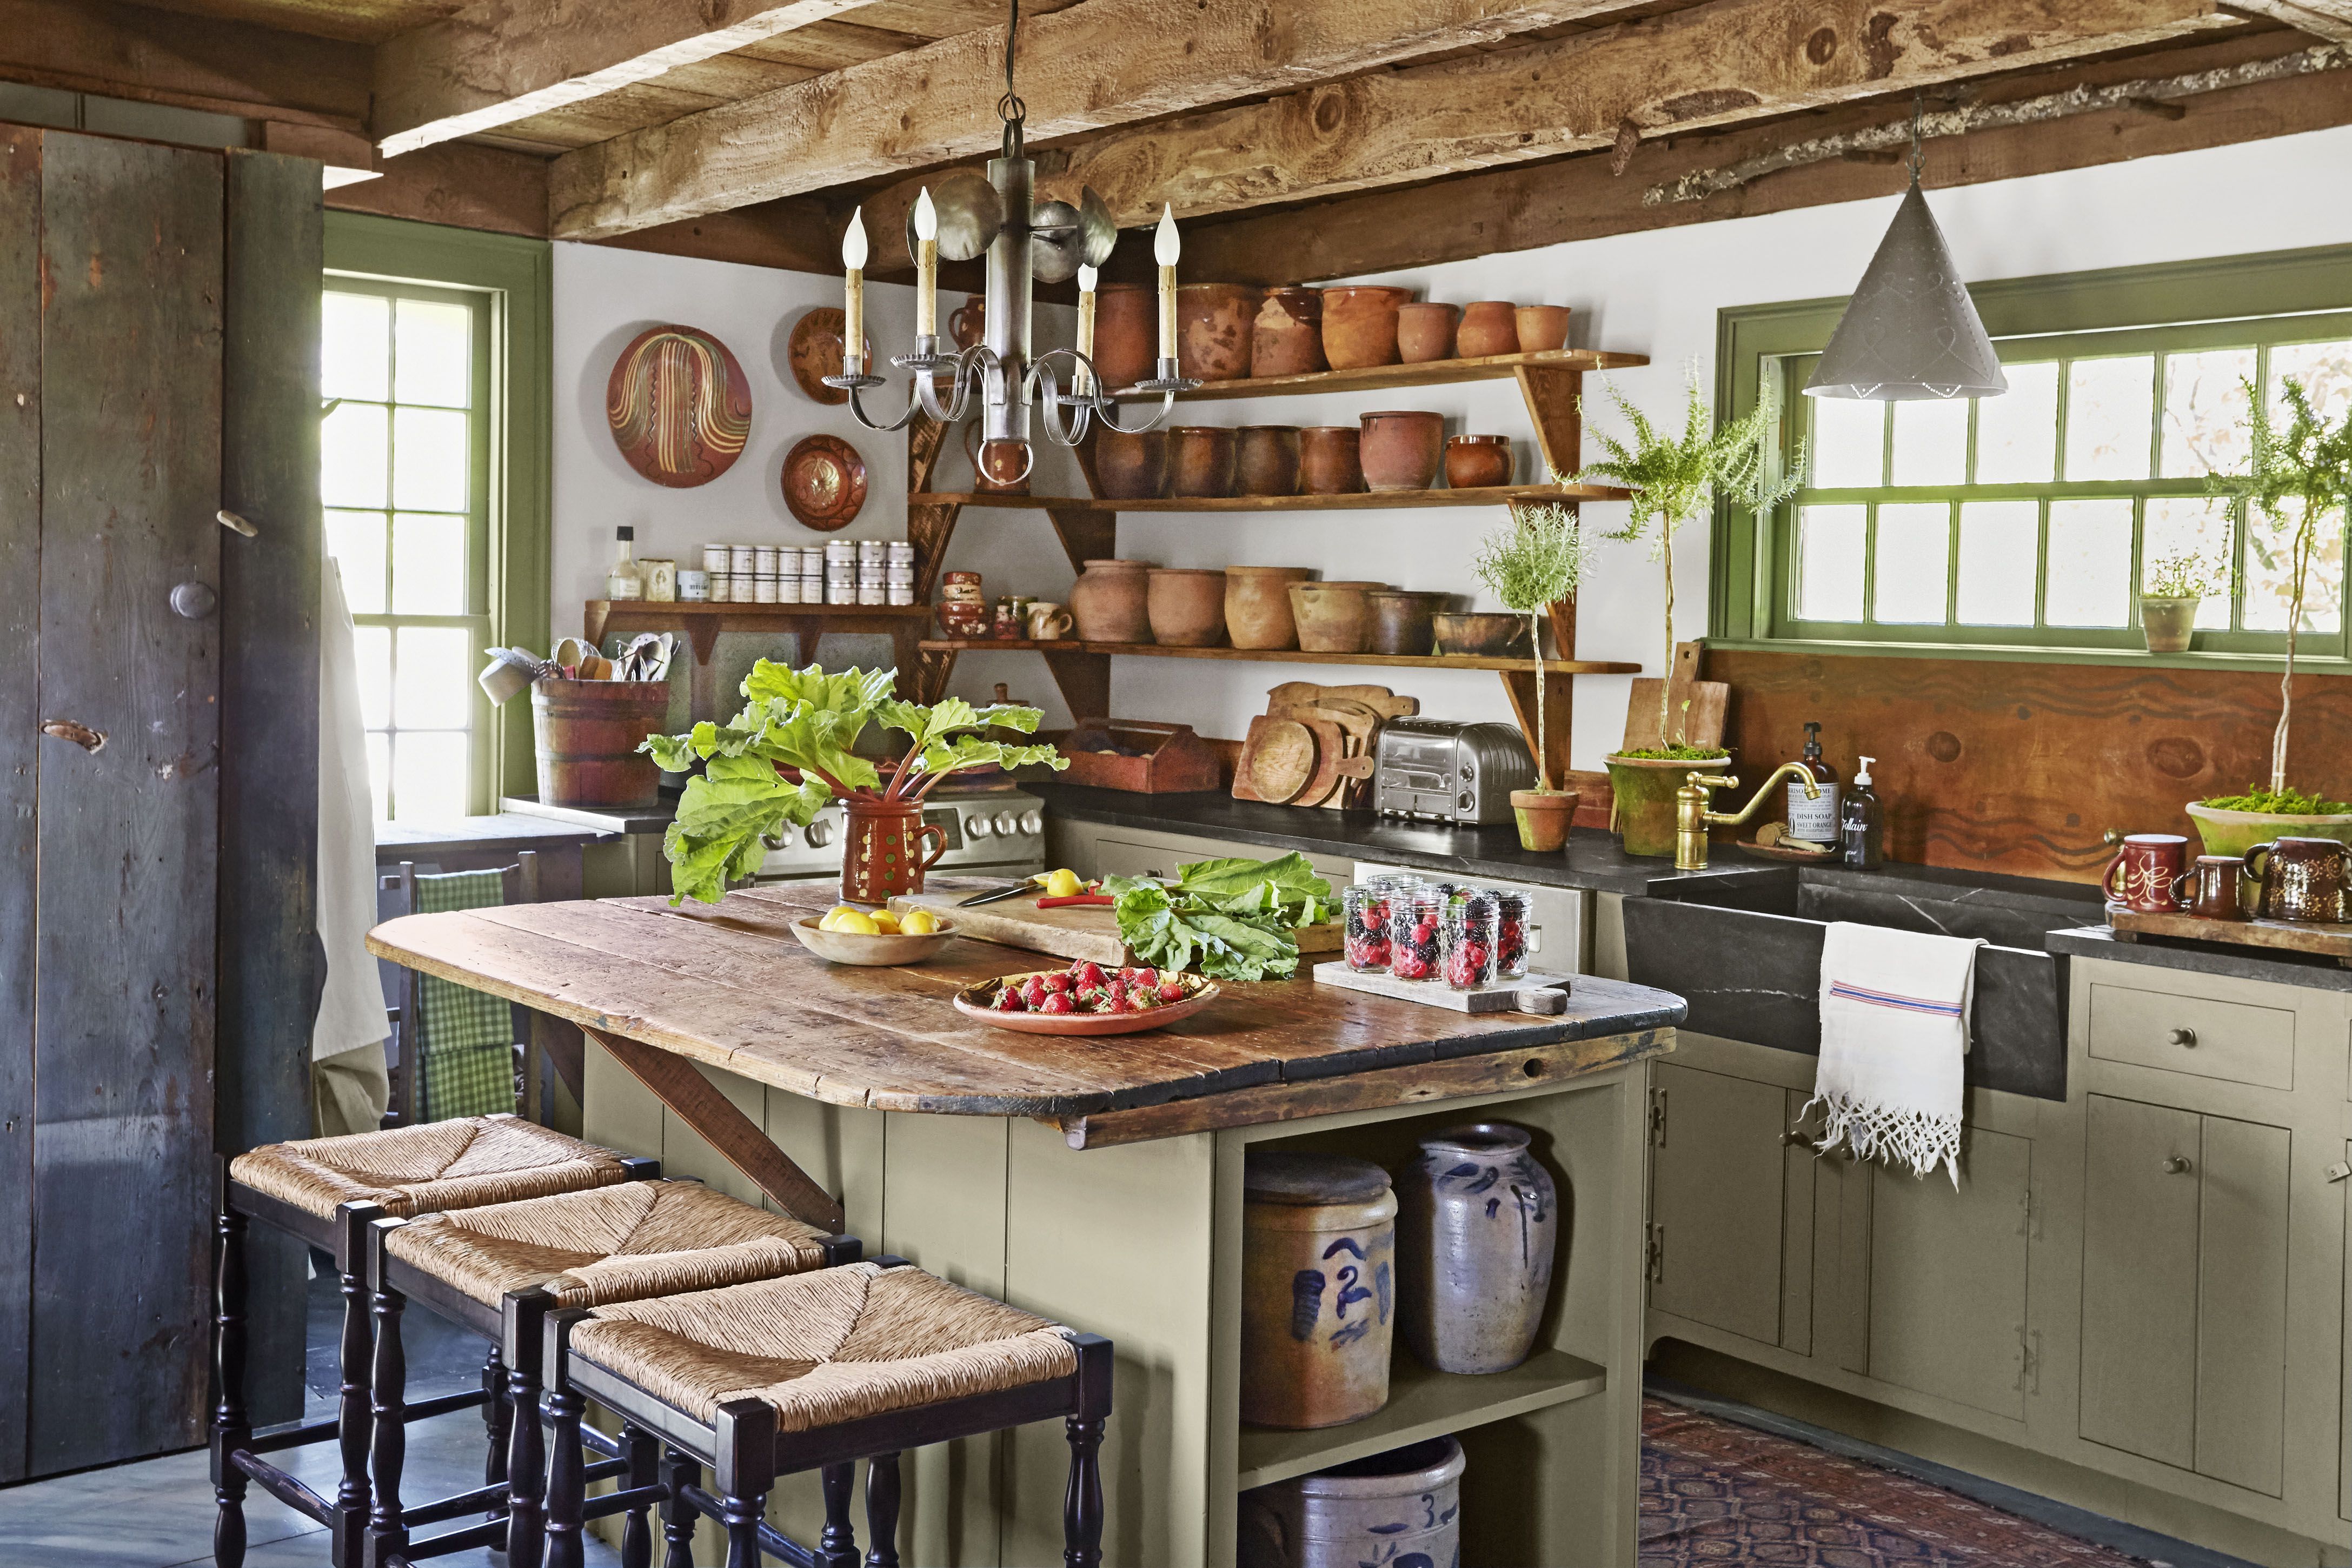 10 Farmhouse Style Kitchens - Rustic Decor Ideas for Kitchens